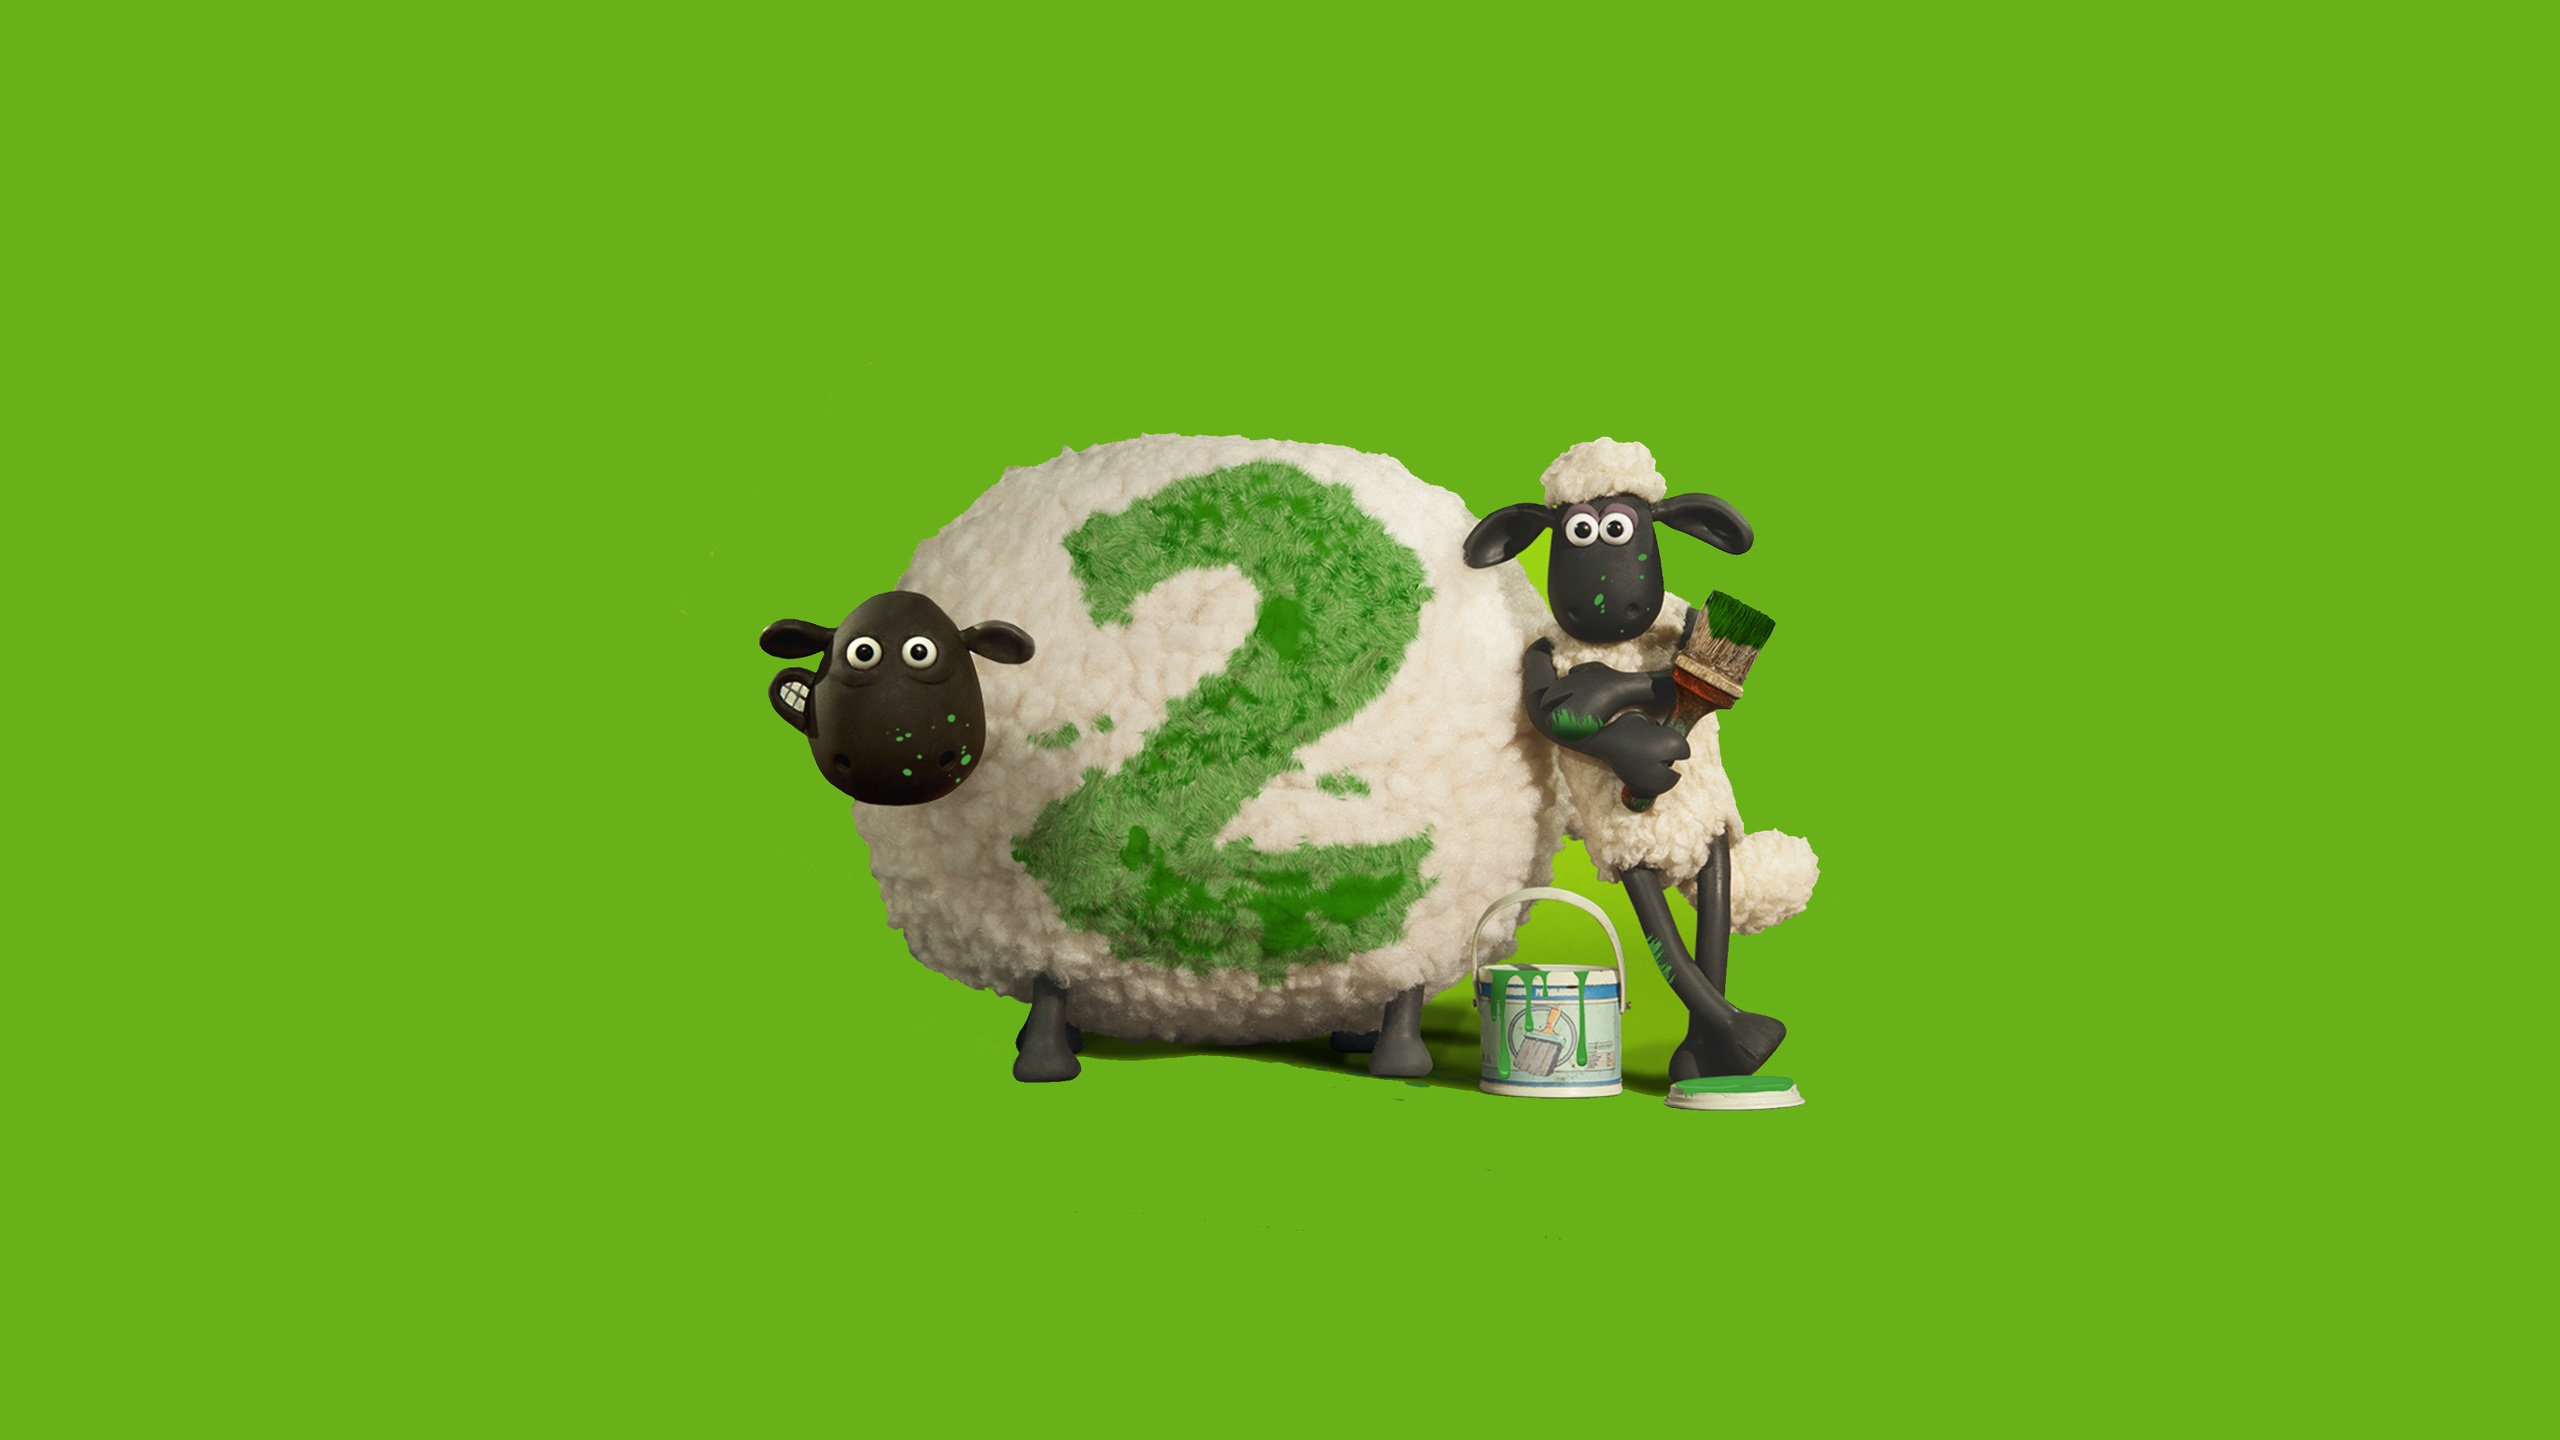 Shaun le mouton 2